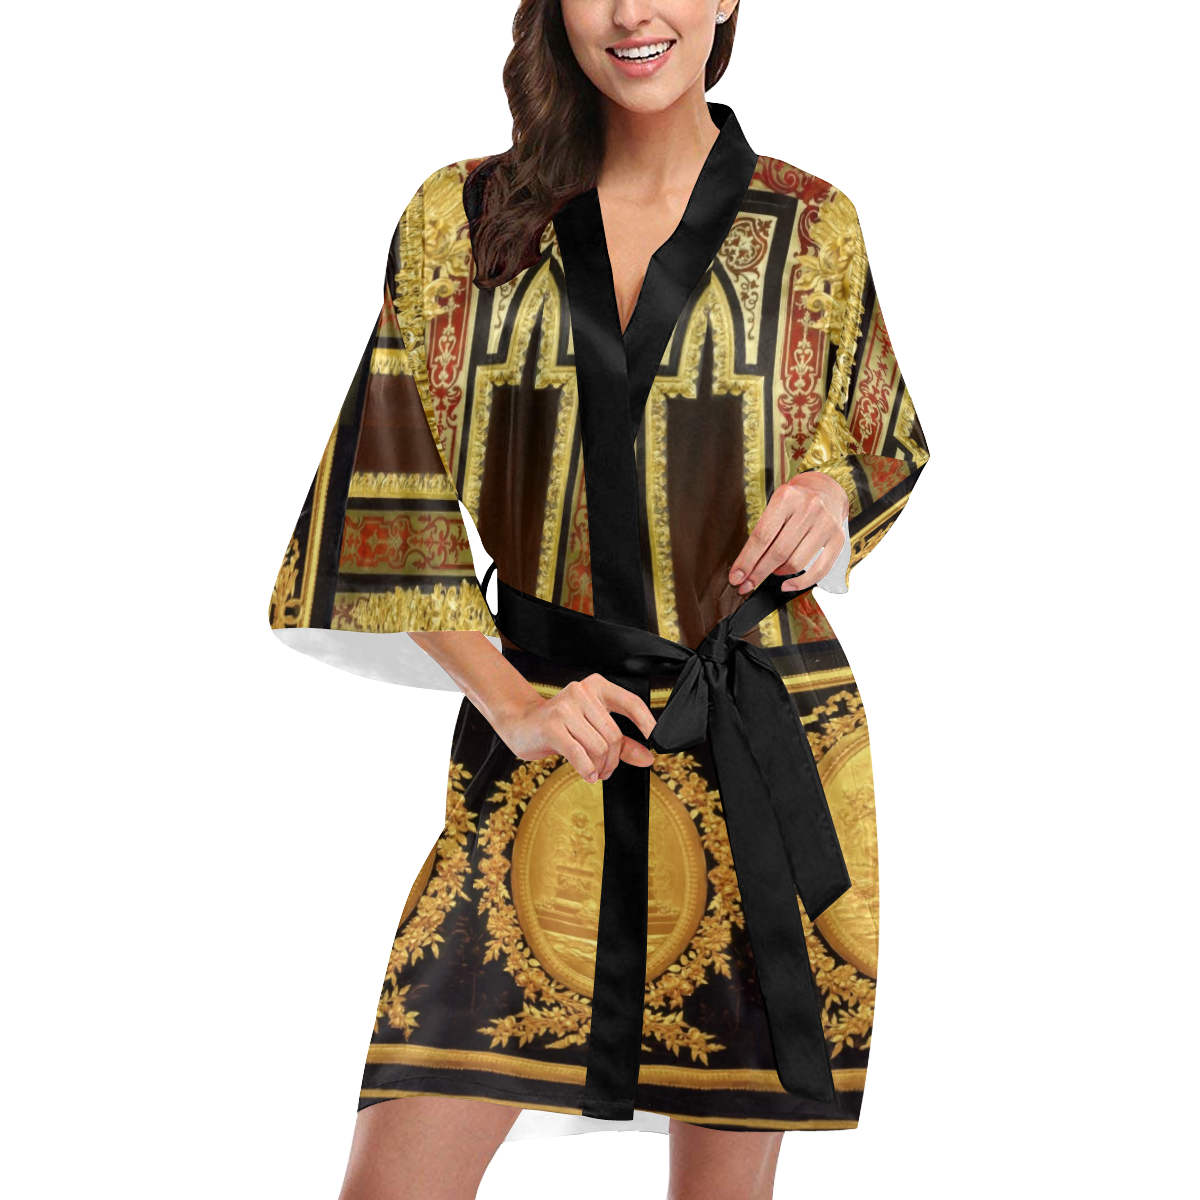 Robe | monarch robes matouk robe softies robe cozy earth robe